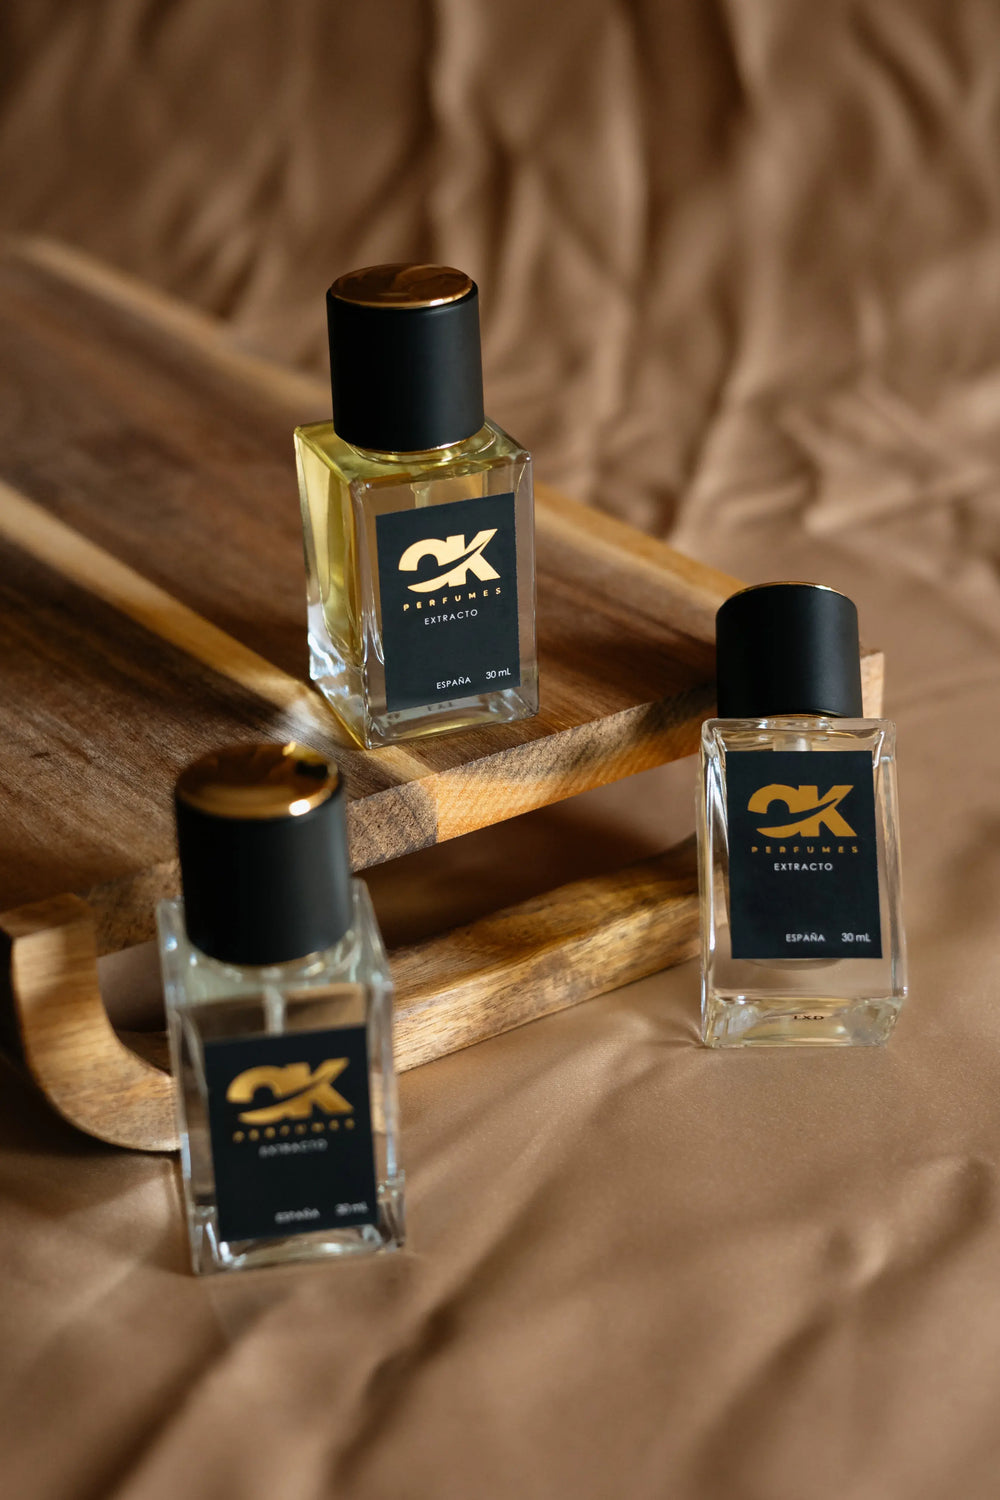 All Products – Página 14 – OK Perfumes